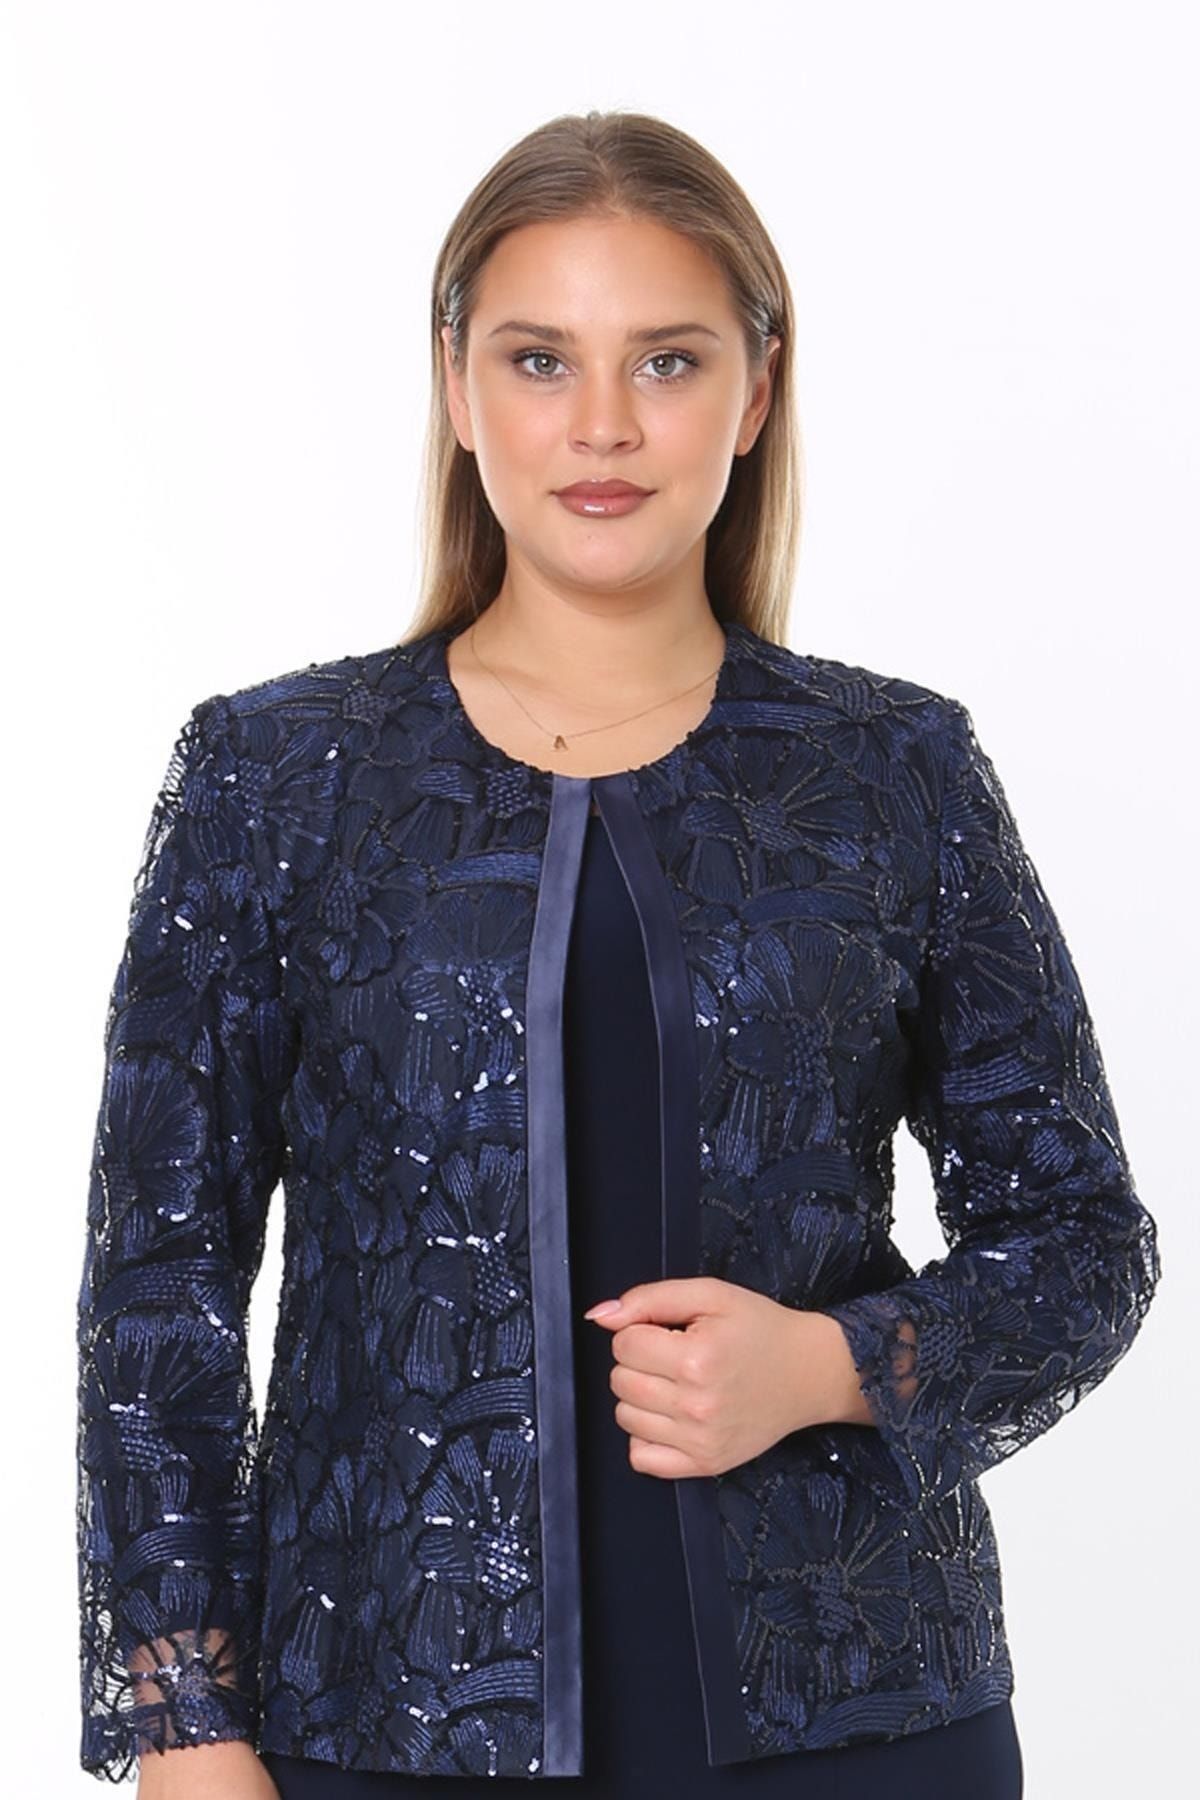 Ladies First Büyük Beden 3808 Lacivert Ceket+Bluz Takım